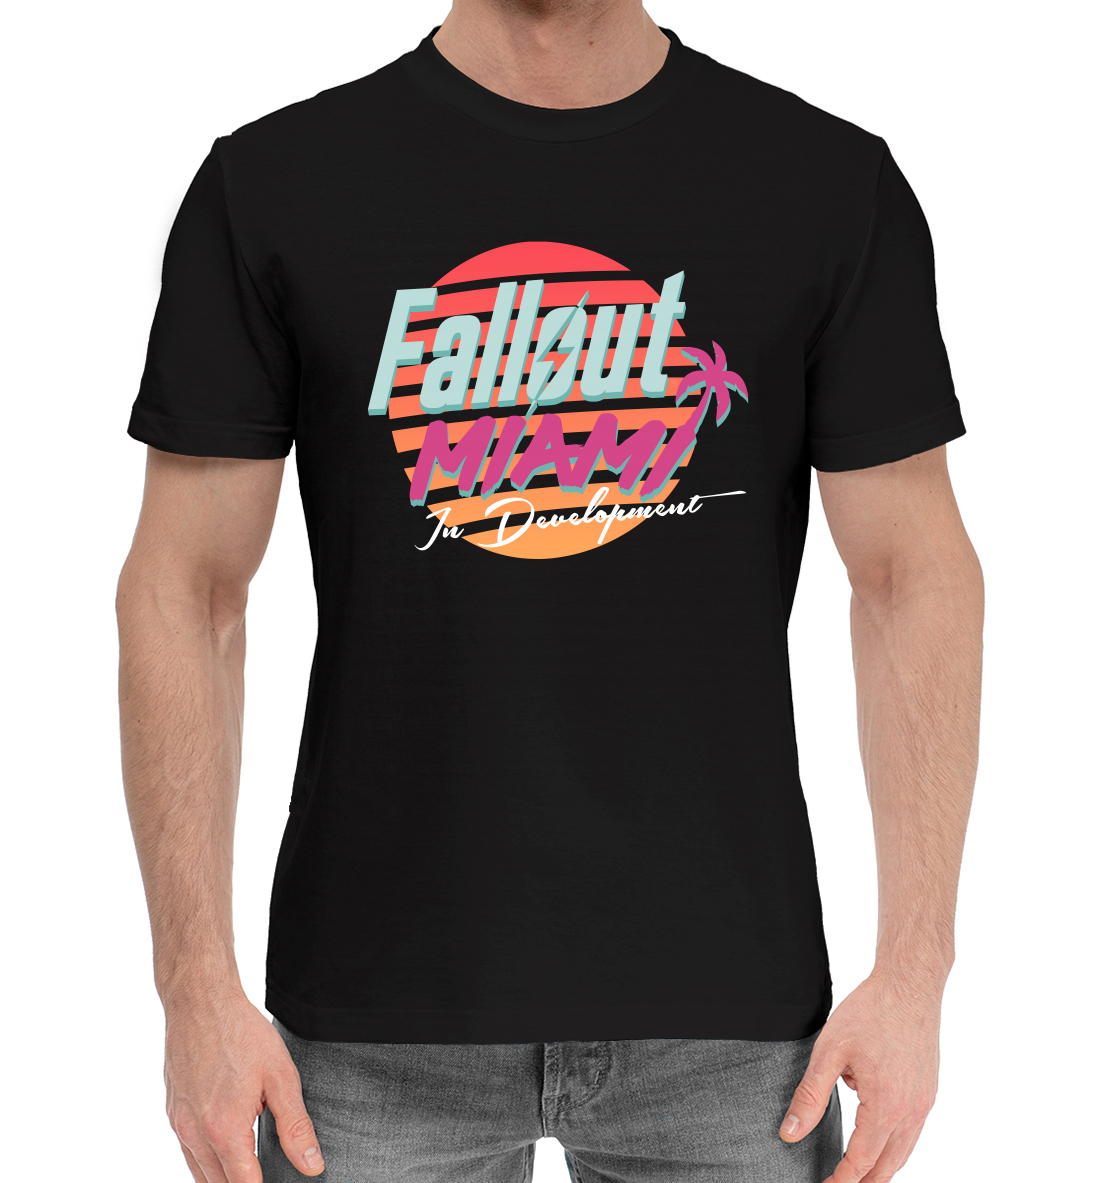 Мужская Хлопковая футболка с принтом Fallout Miami, артикул FOT-623509-hfu-2mp